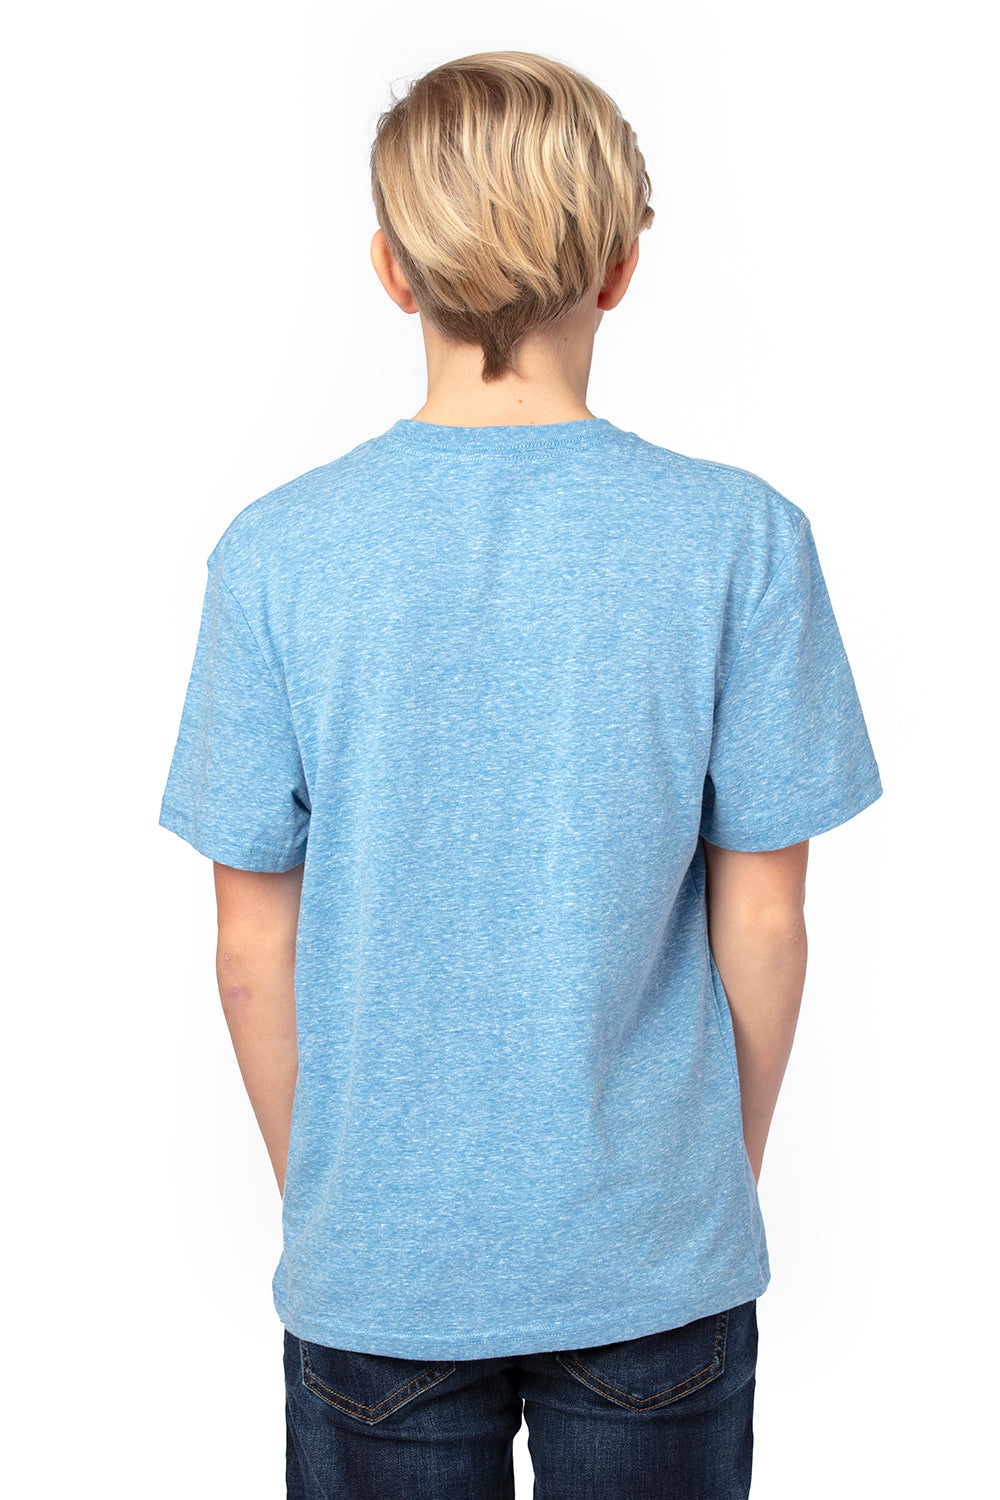 Threadfast Apparel 602A Youth Short Sleeve Crewneck T-Shirt Royal Blue Back